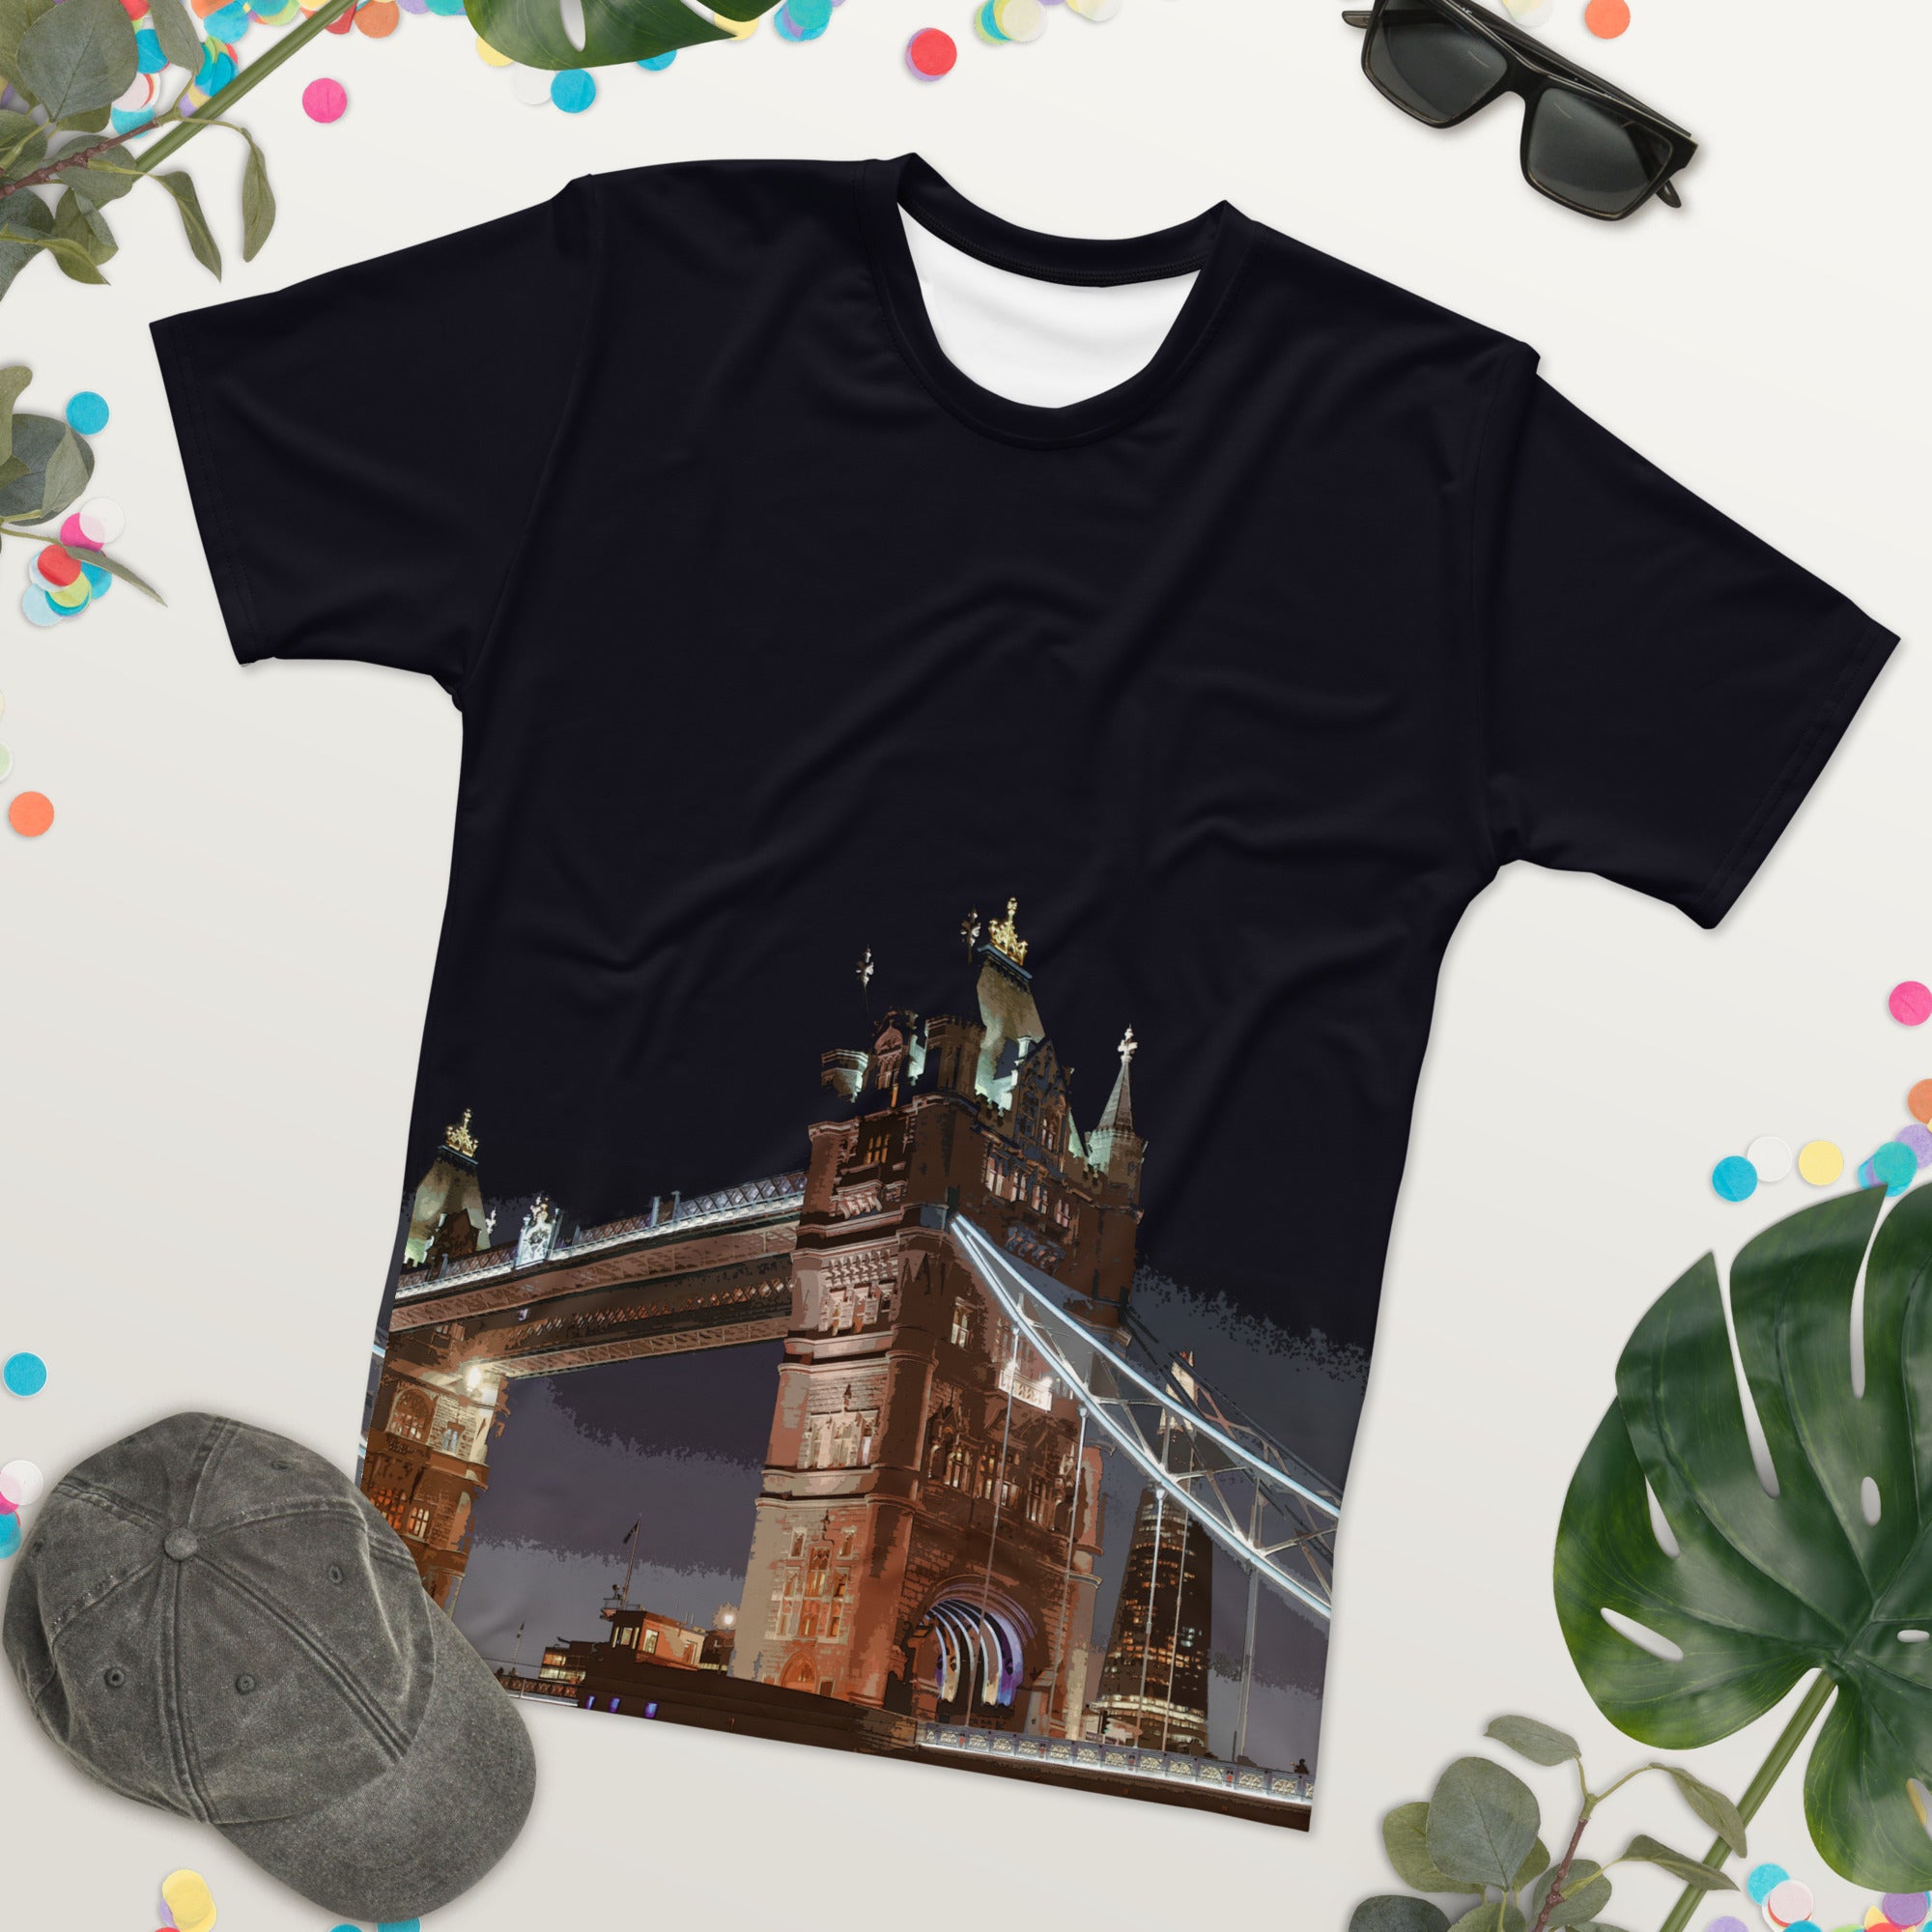 Tower Bridge at Night - All Over Print - T-Shirt